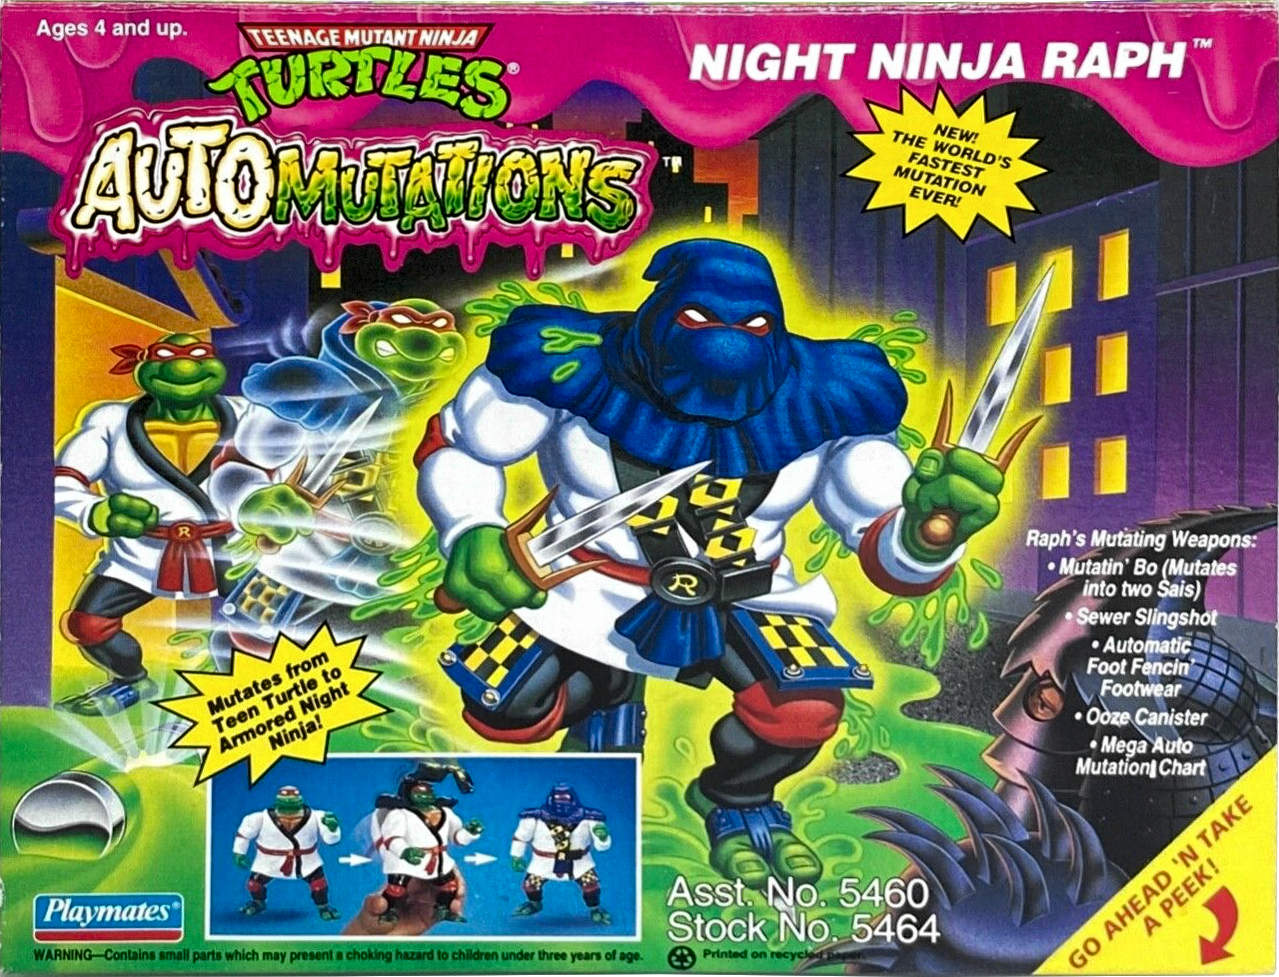 https://www.actionfigure411.com/teenage-mutant-ninja-turtles/images/night-ninja-raph-7008.jpg